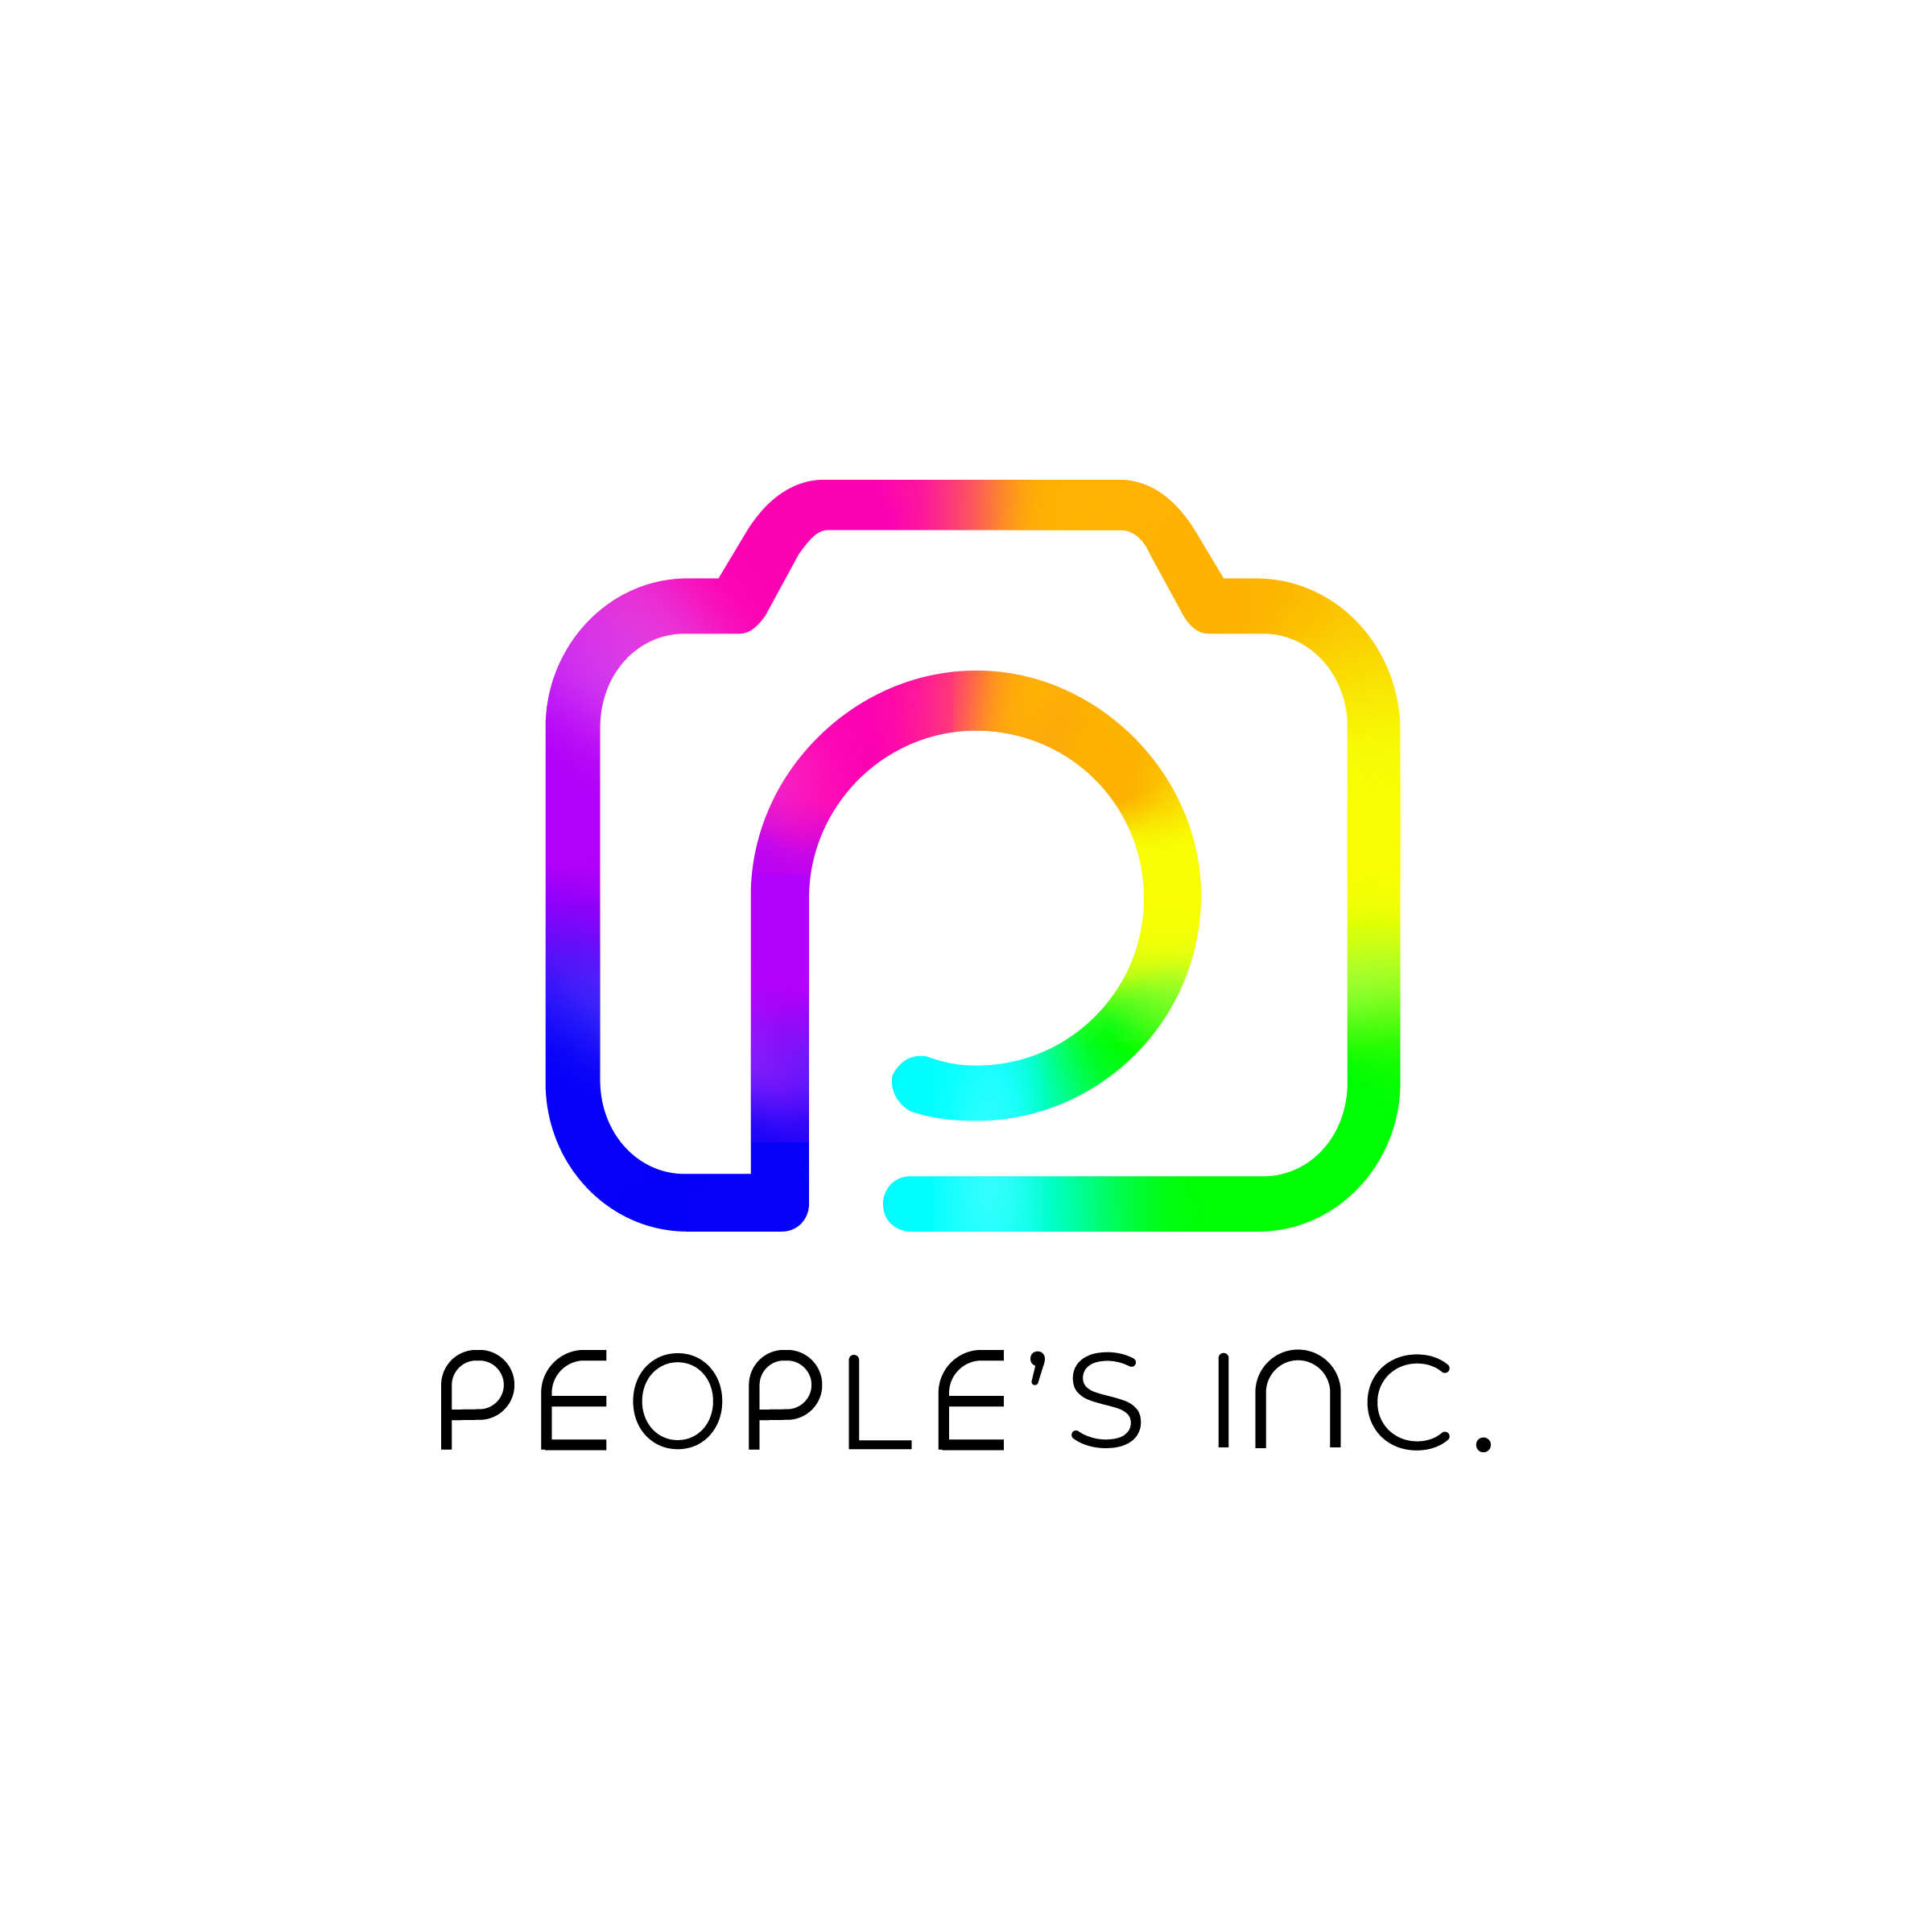 Free People - Crunchbase Company Profile & Funding